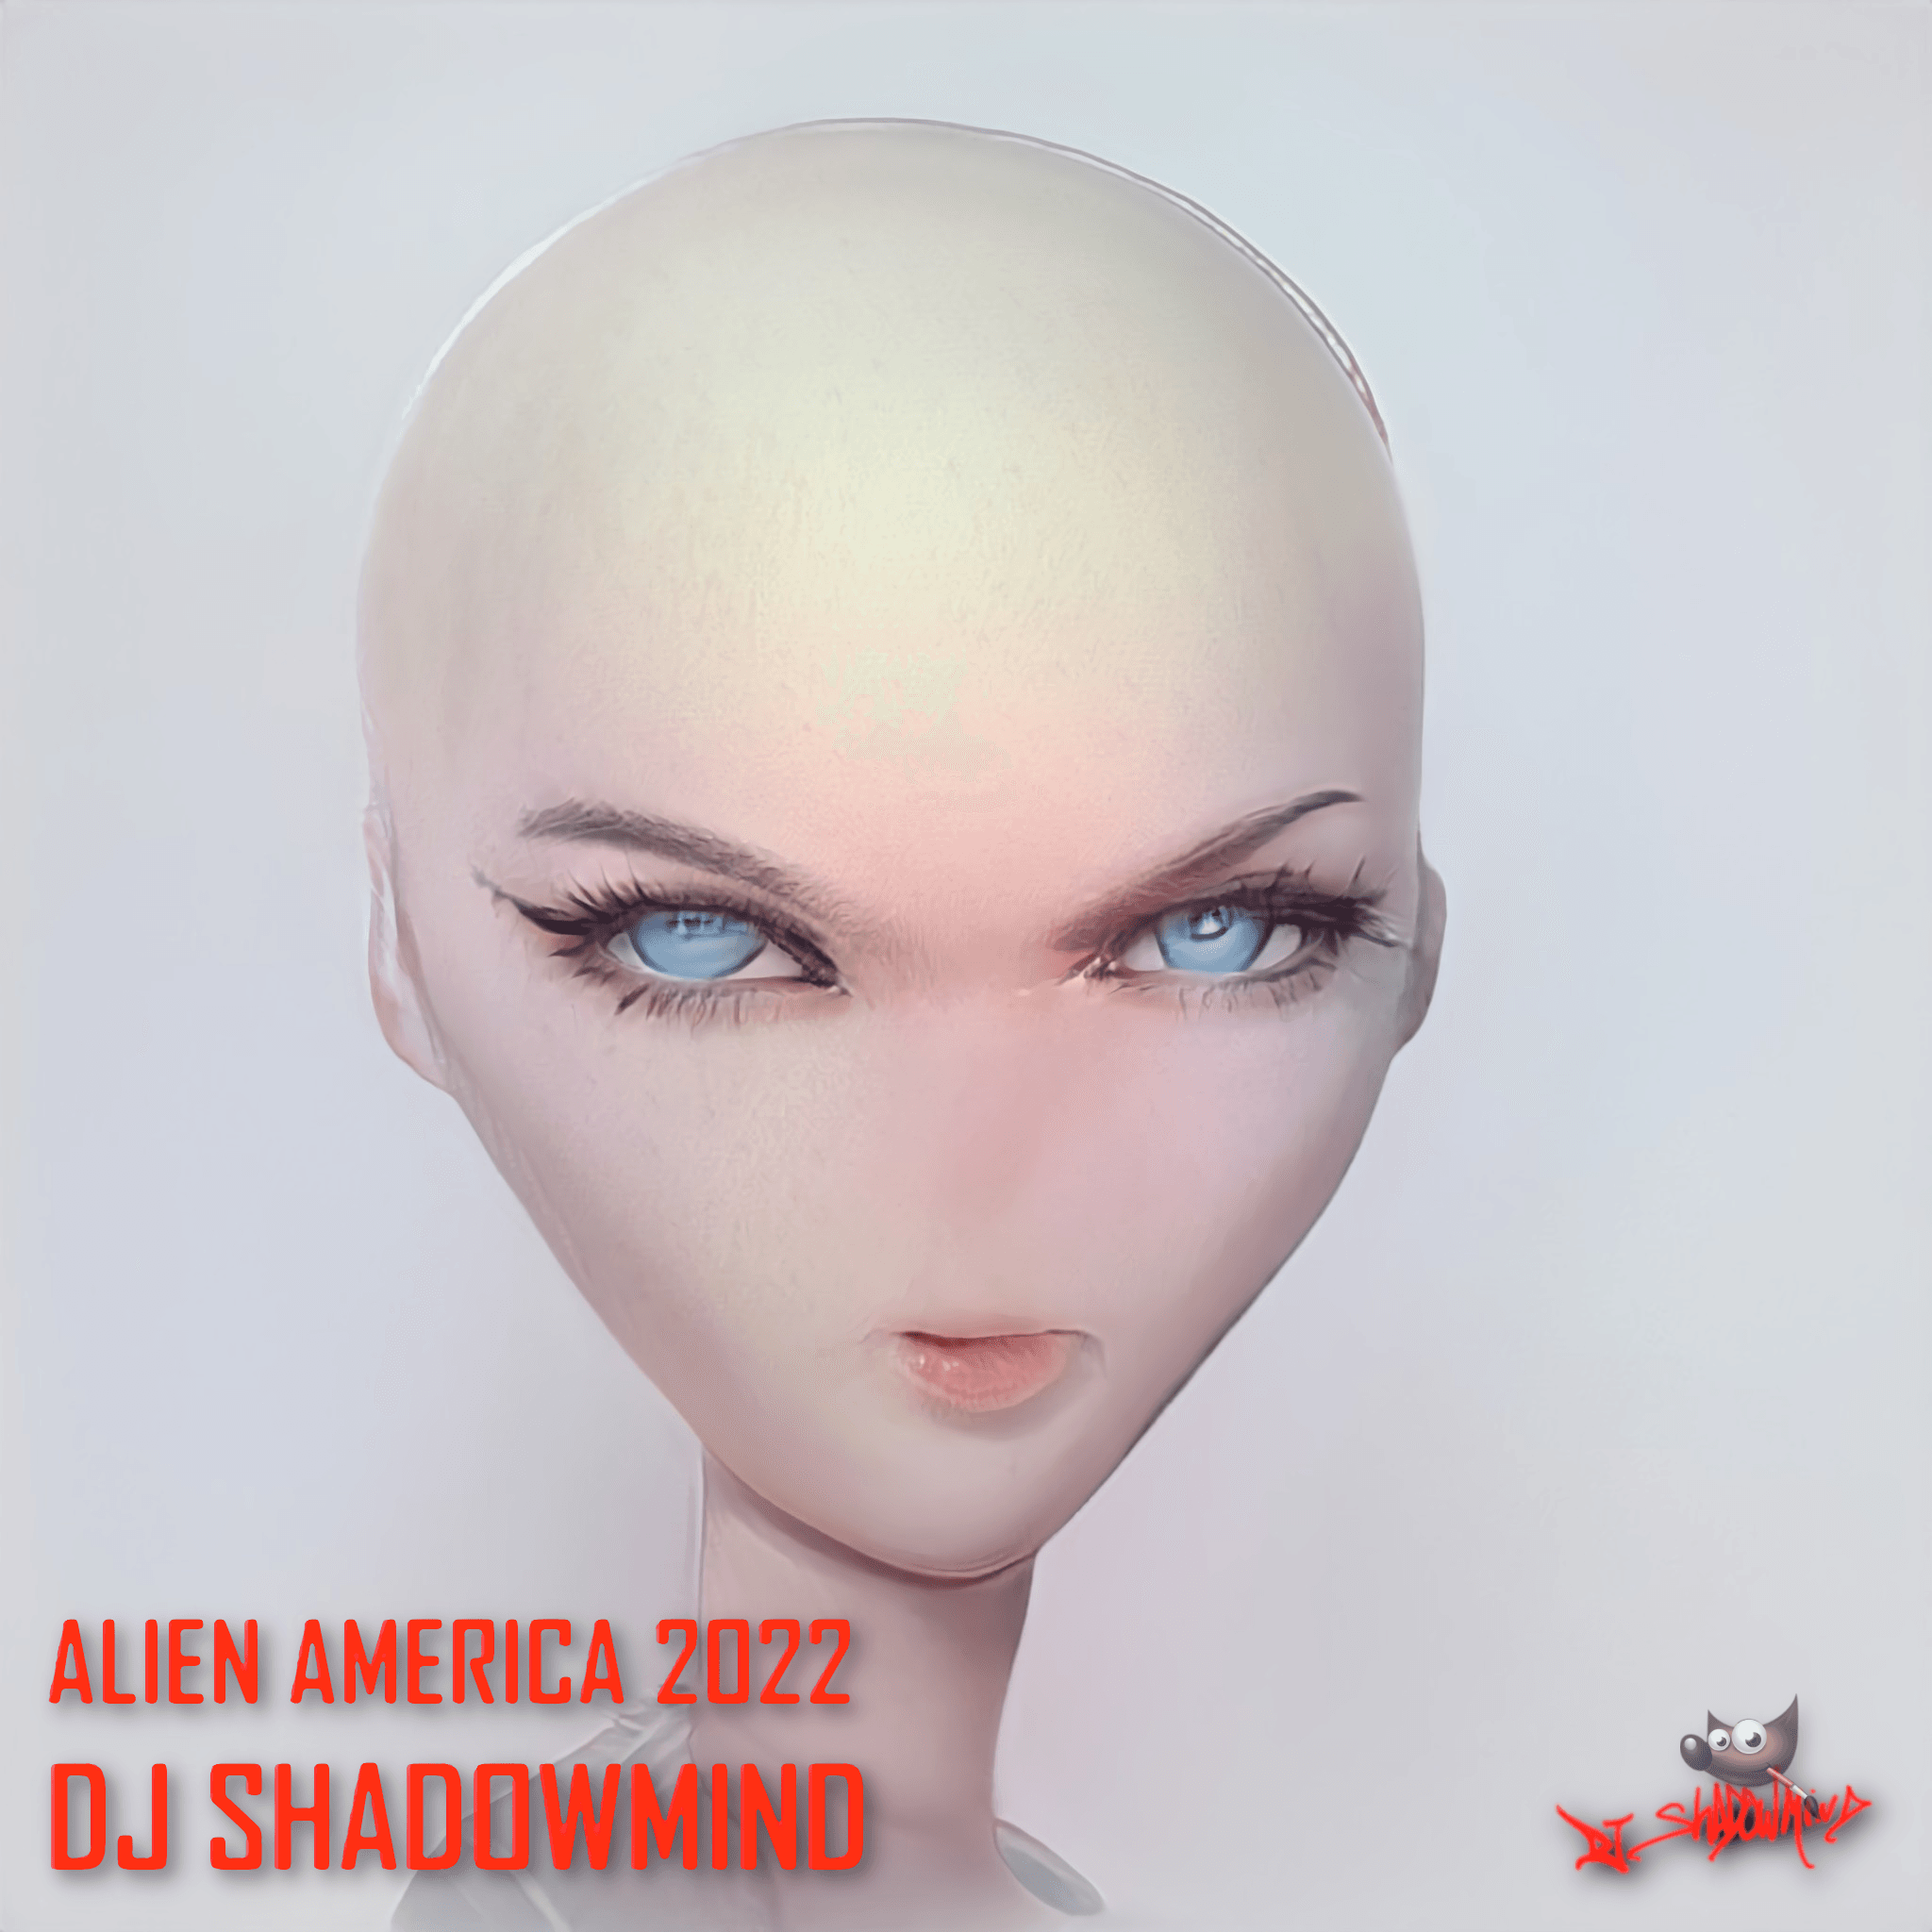 Alien America 2022 - Agent 004